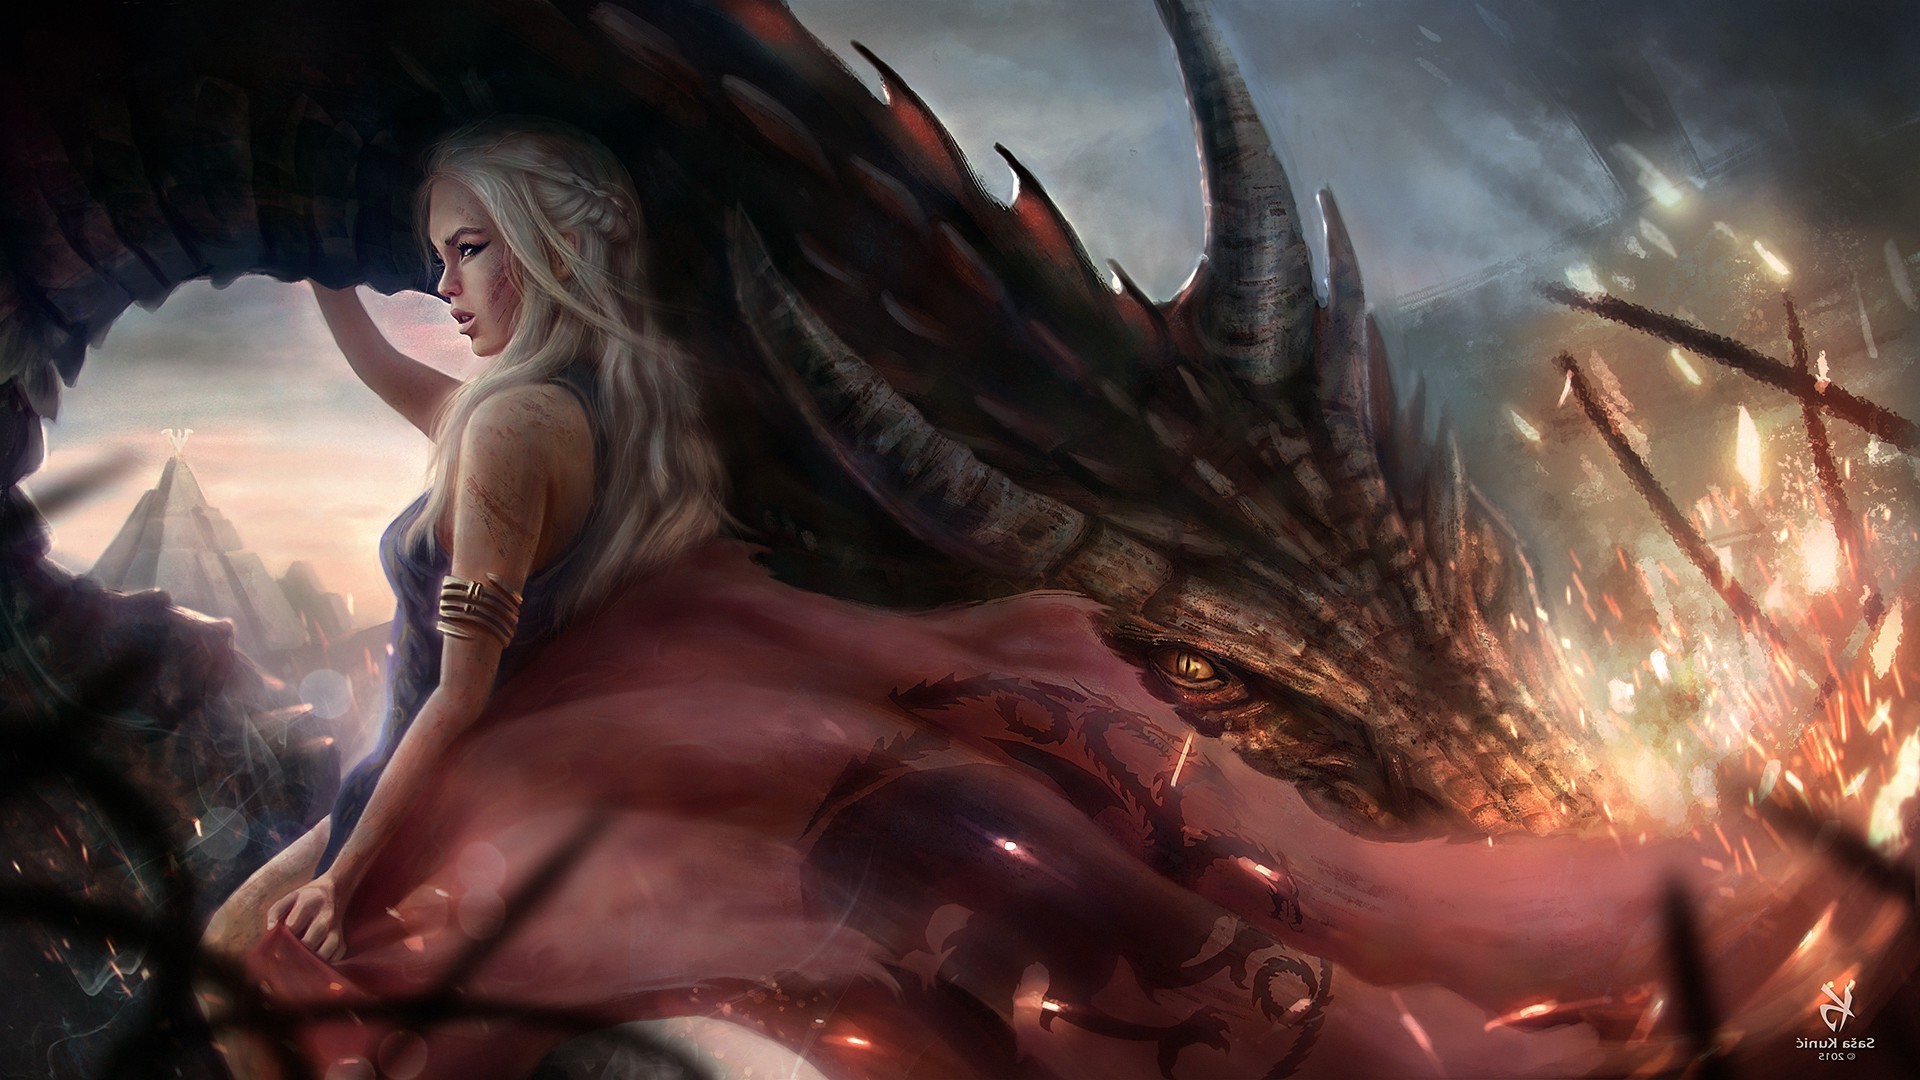 1920x1080 fantasy art anime artwork dragon Game of Thrones demon mythology Daenerys Targaryen  House Targaryen screenshot 